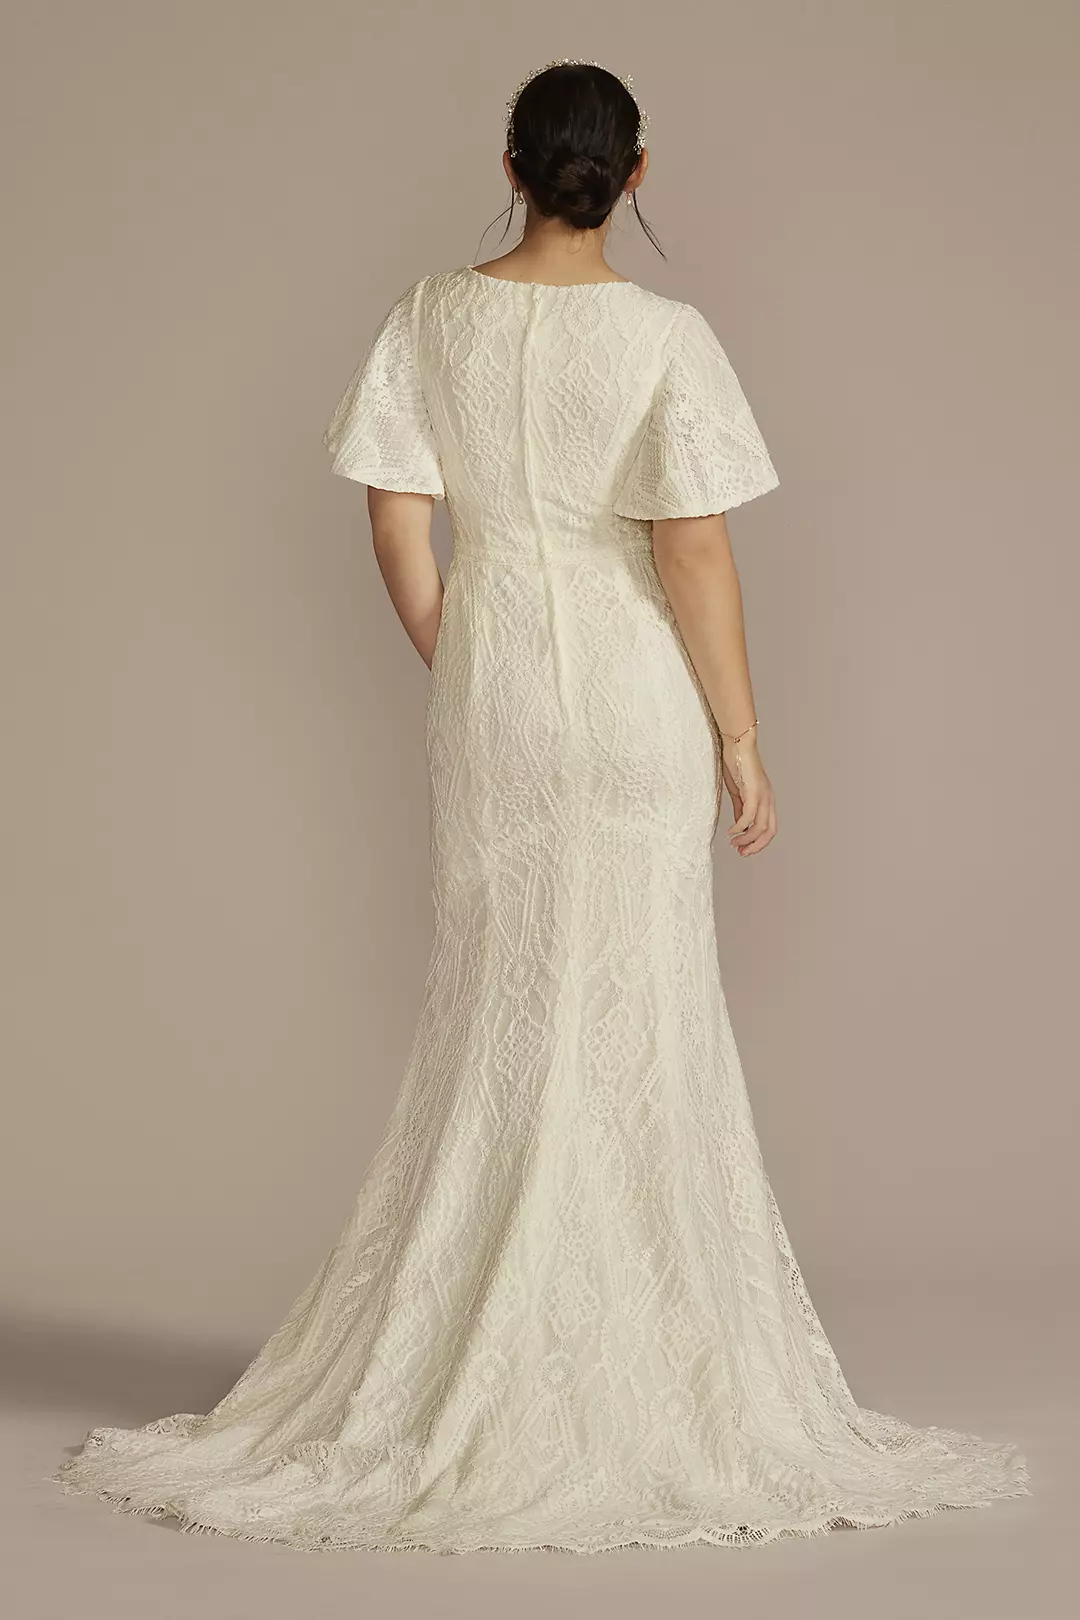 High Neck Lace Embellished Modest Wedding Dress Image 2